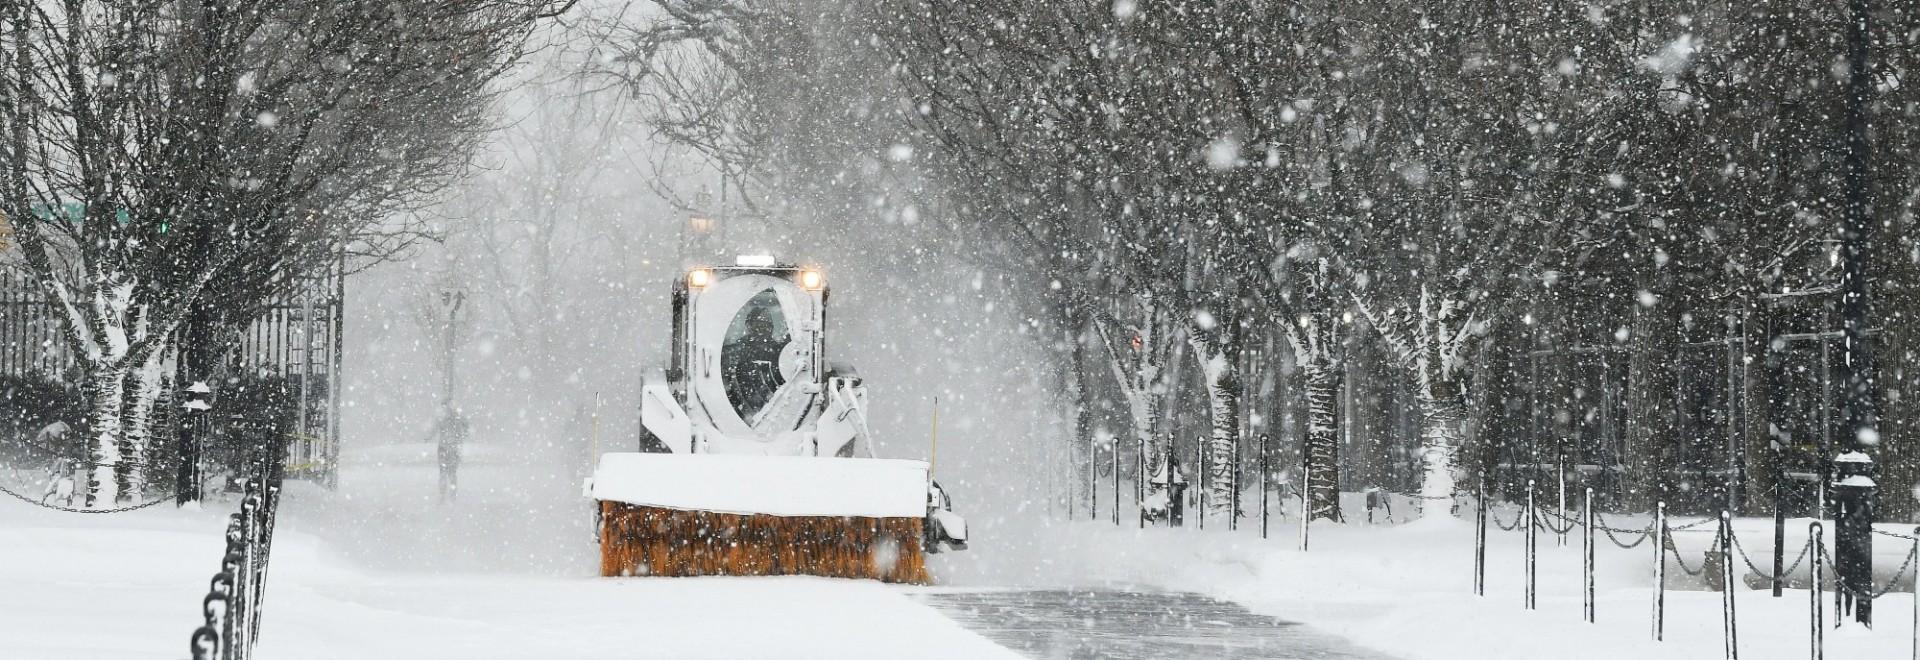 A snowplow clears a path across a snowy College Walk.